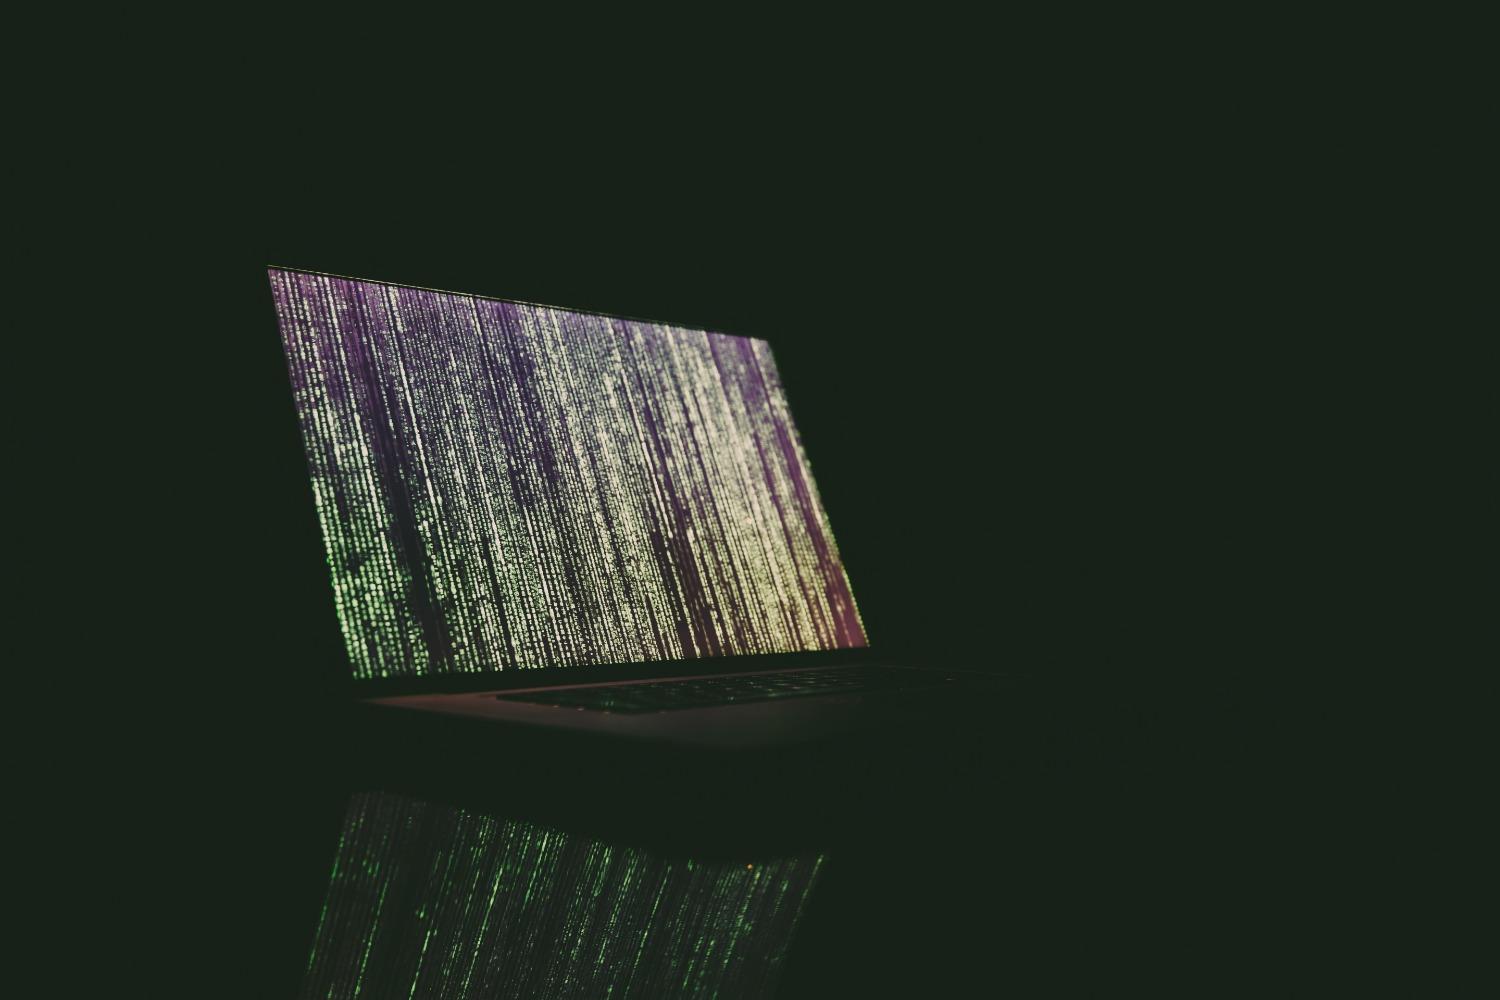 Code runs across a laptop